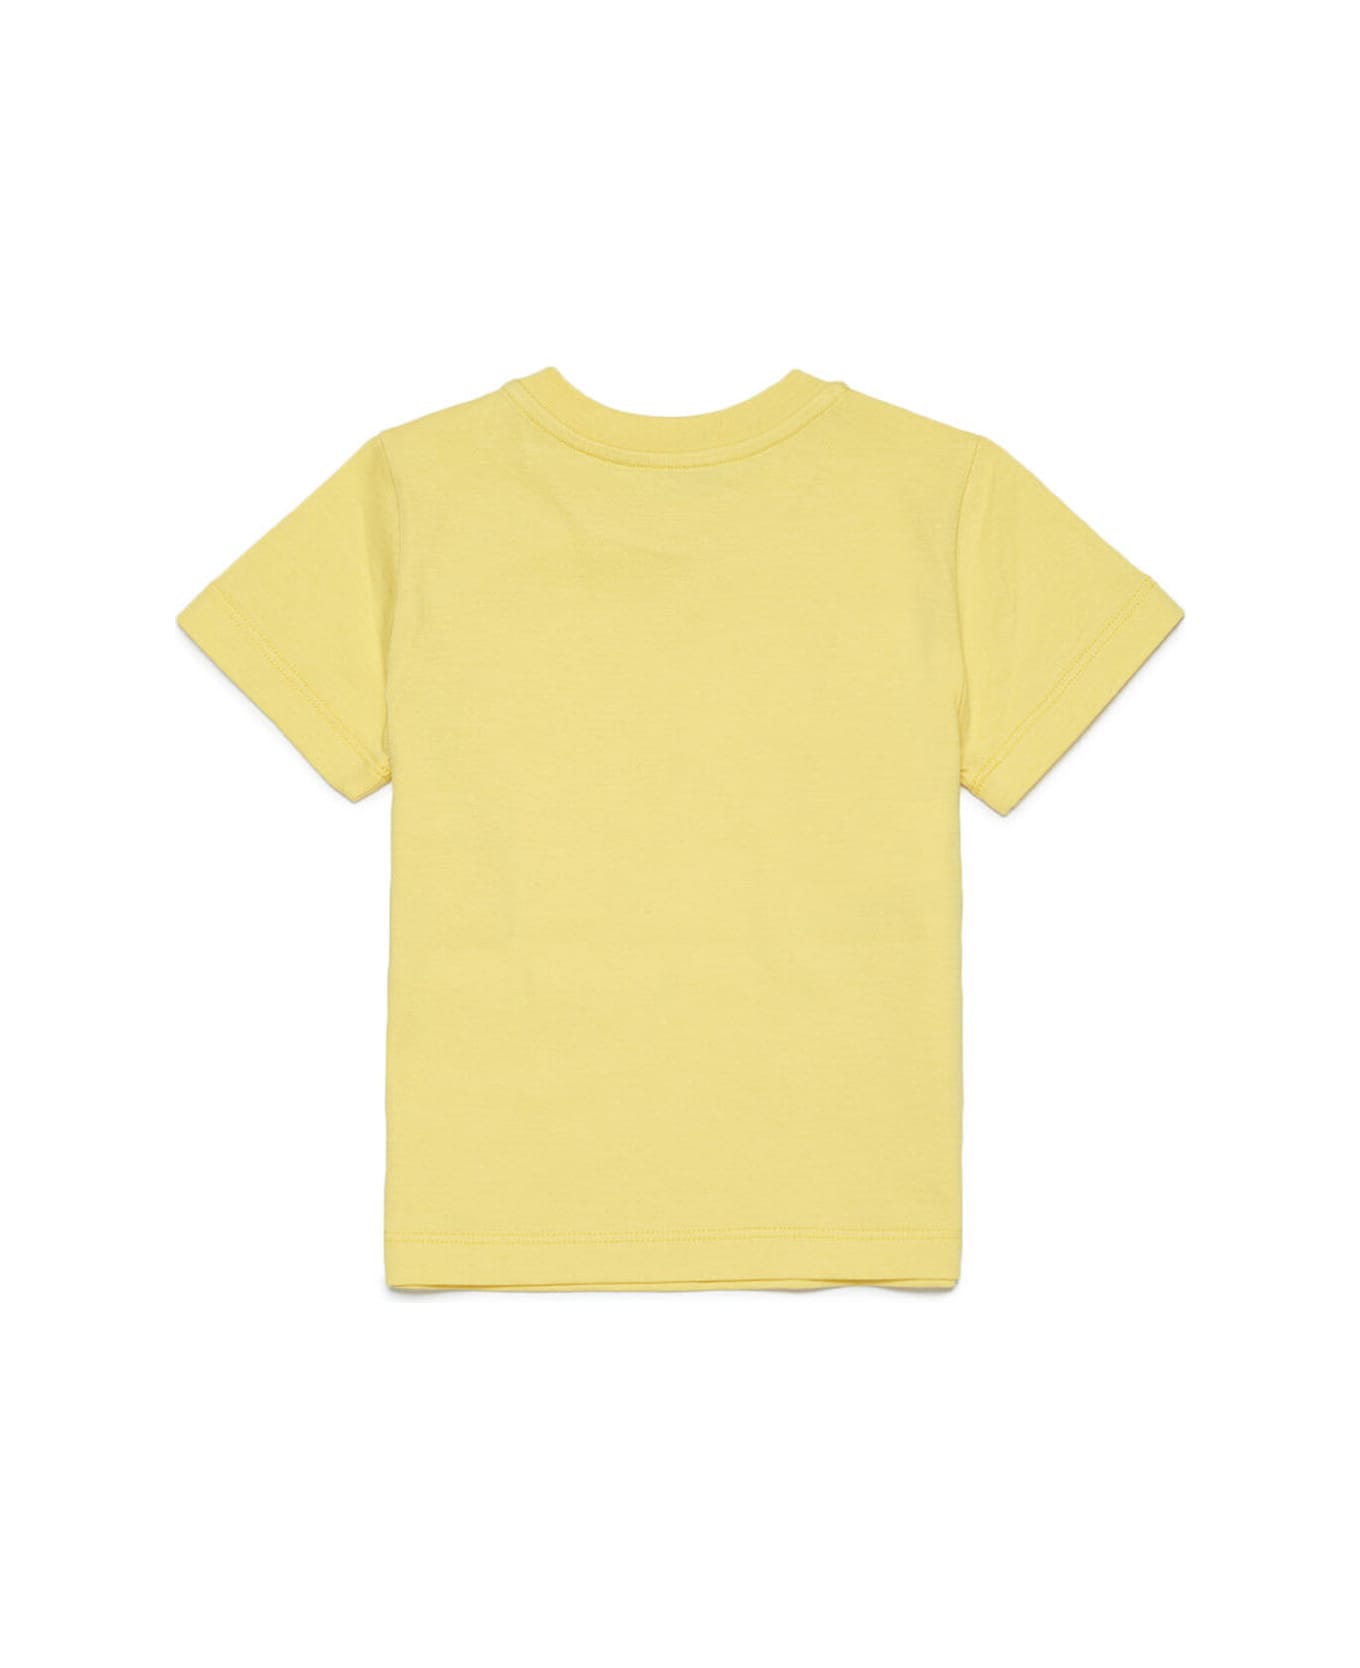 Marni Mt60b T-shirt Marni Yellow Jersey T-shirt With Marni Displaced Logo - zip-up Polo Ralph Lauren Best Friend dog-print socks set